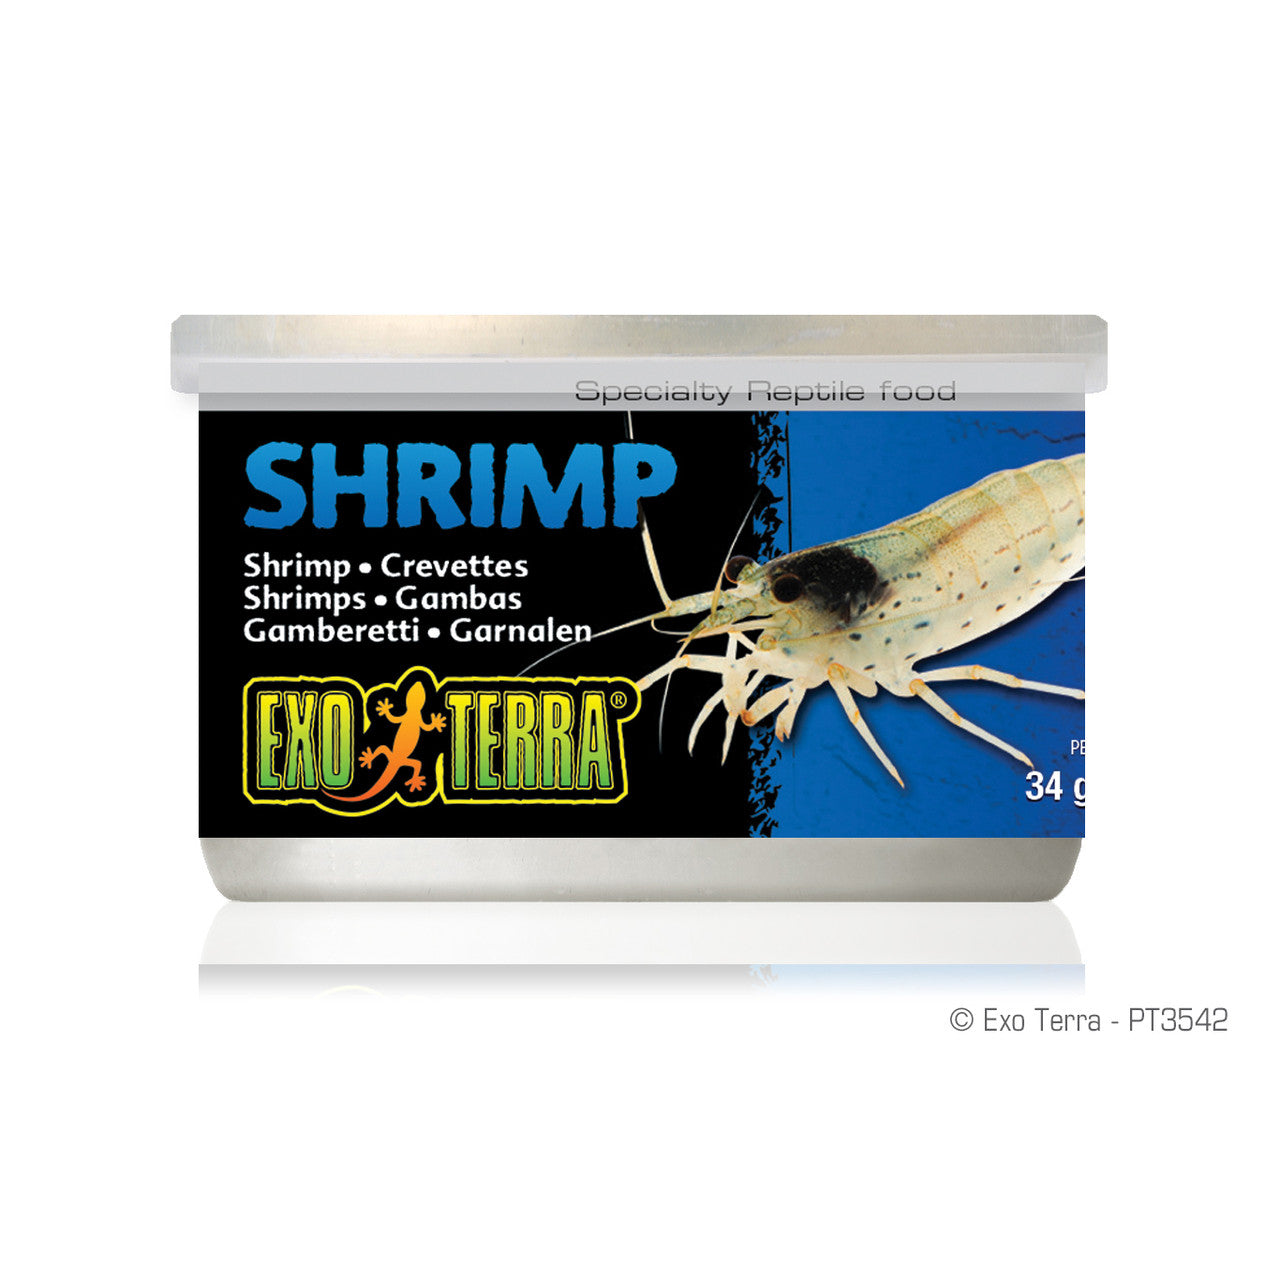 Exo Terra Canned Shrimp, 1.2 oz 015561235426